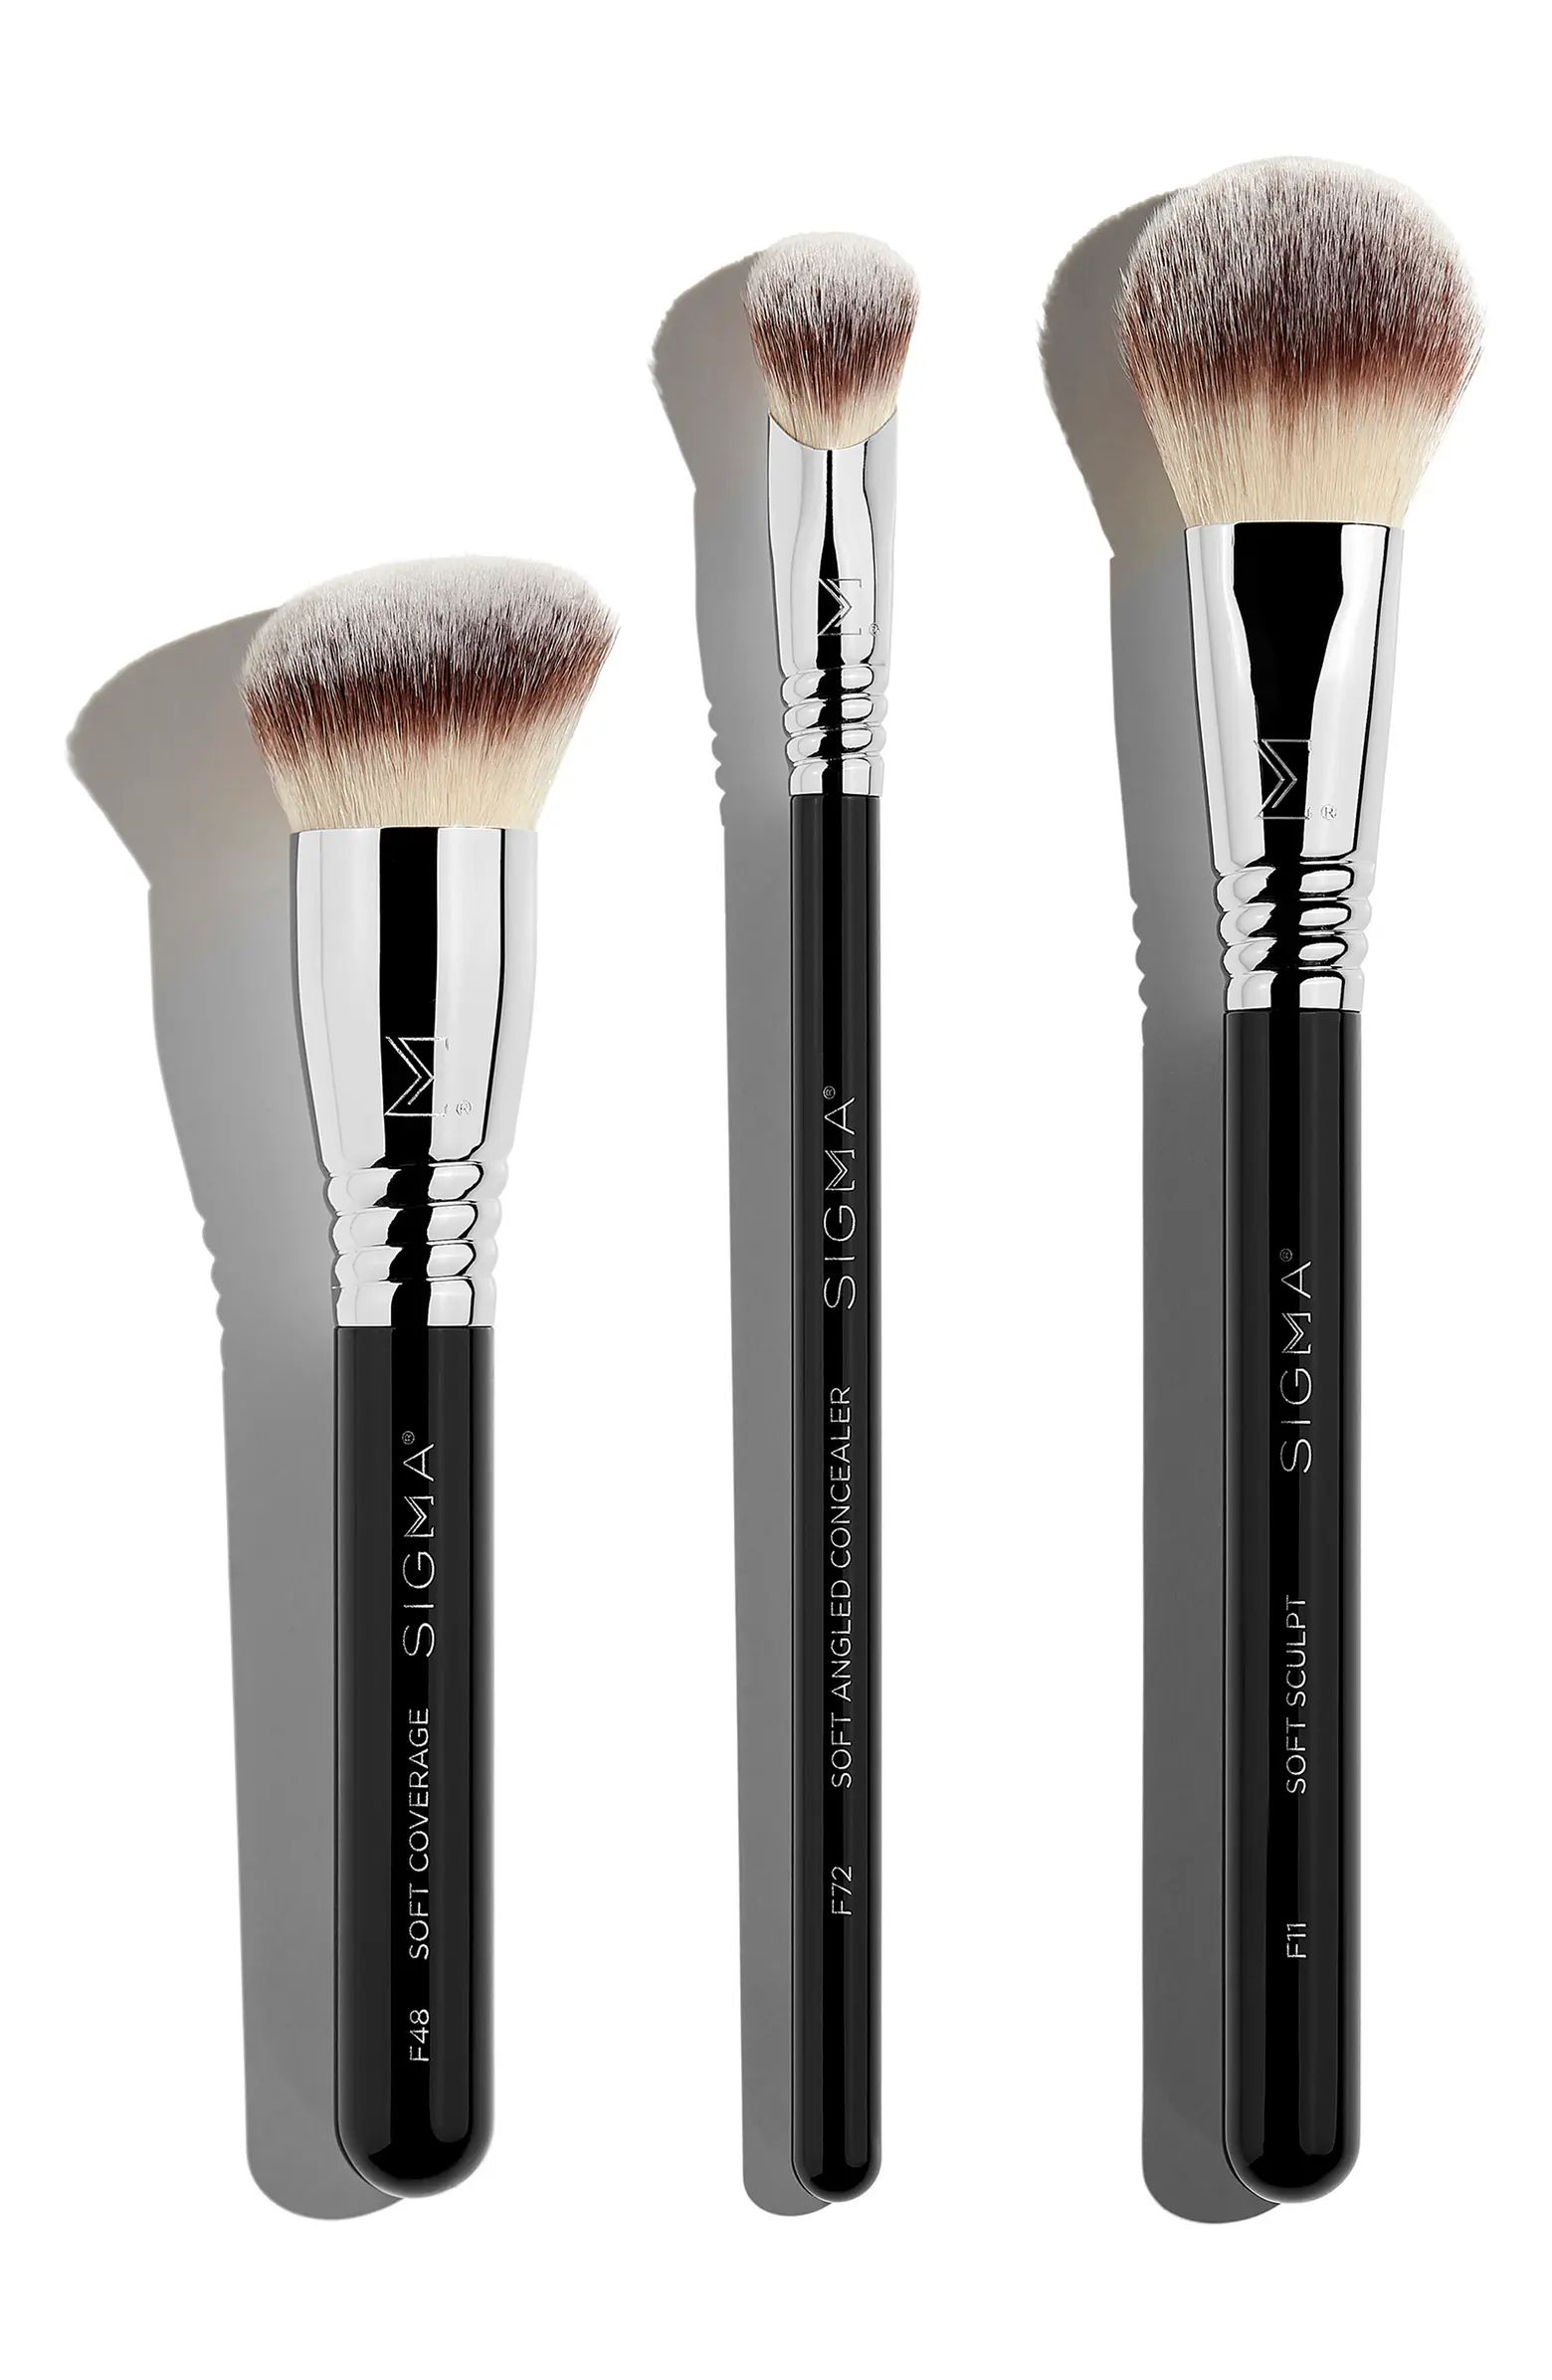 Sigma Beauty Soft Coverage Brush Set $71 Value | Nordstrom | Nordstrom